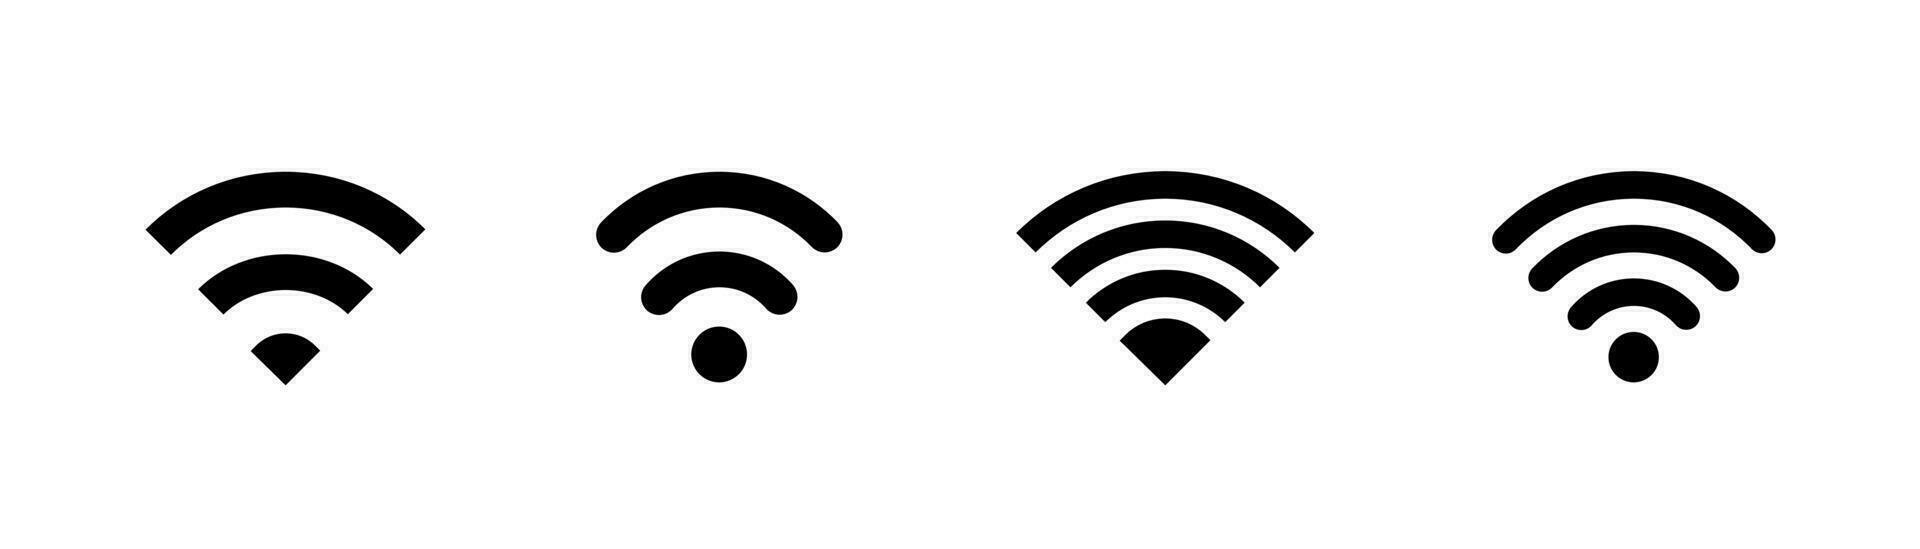 Wifi icon set. Internet symbol. Network icon. Wifi symbol. Internet sign. Stock vector illustration.